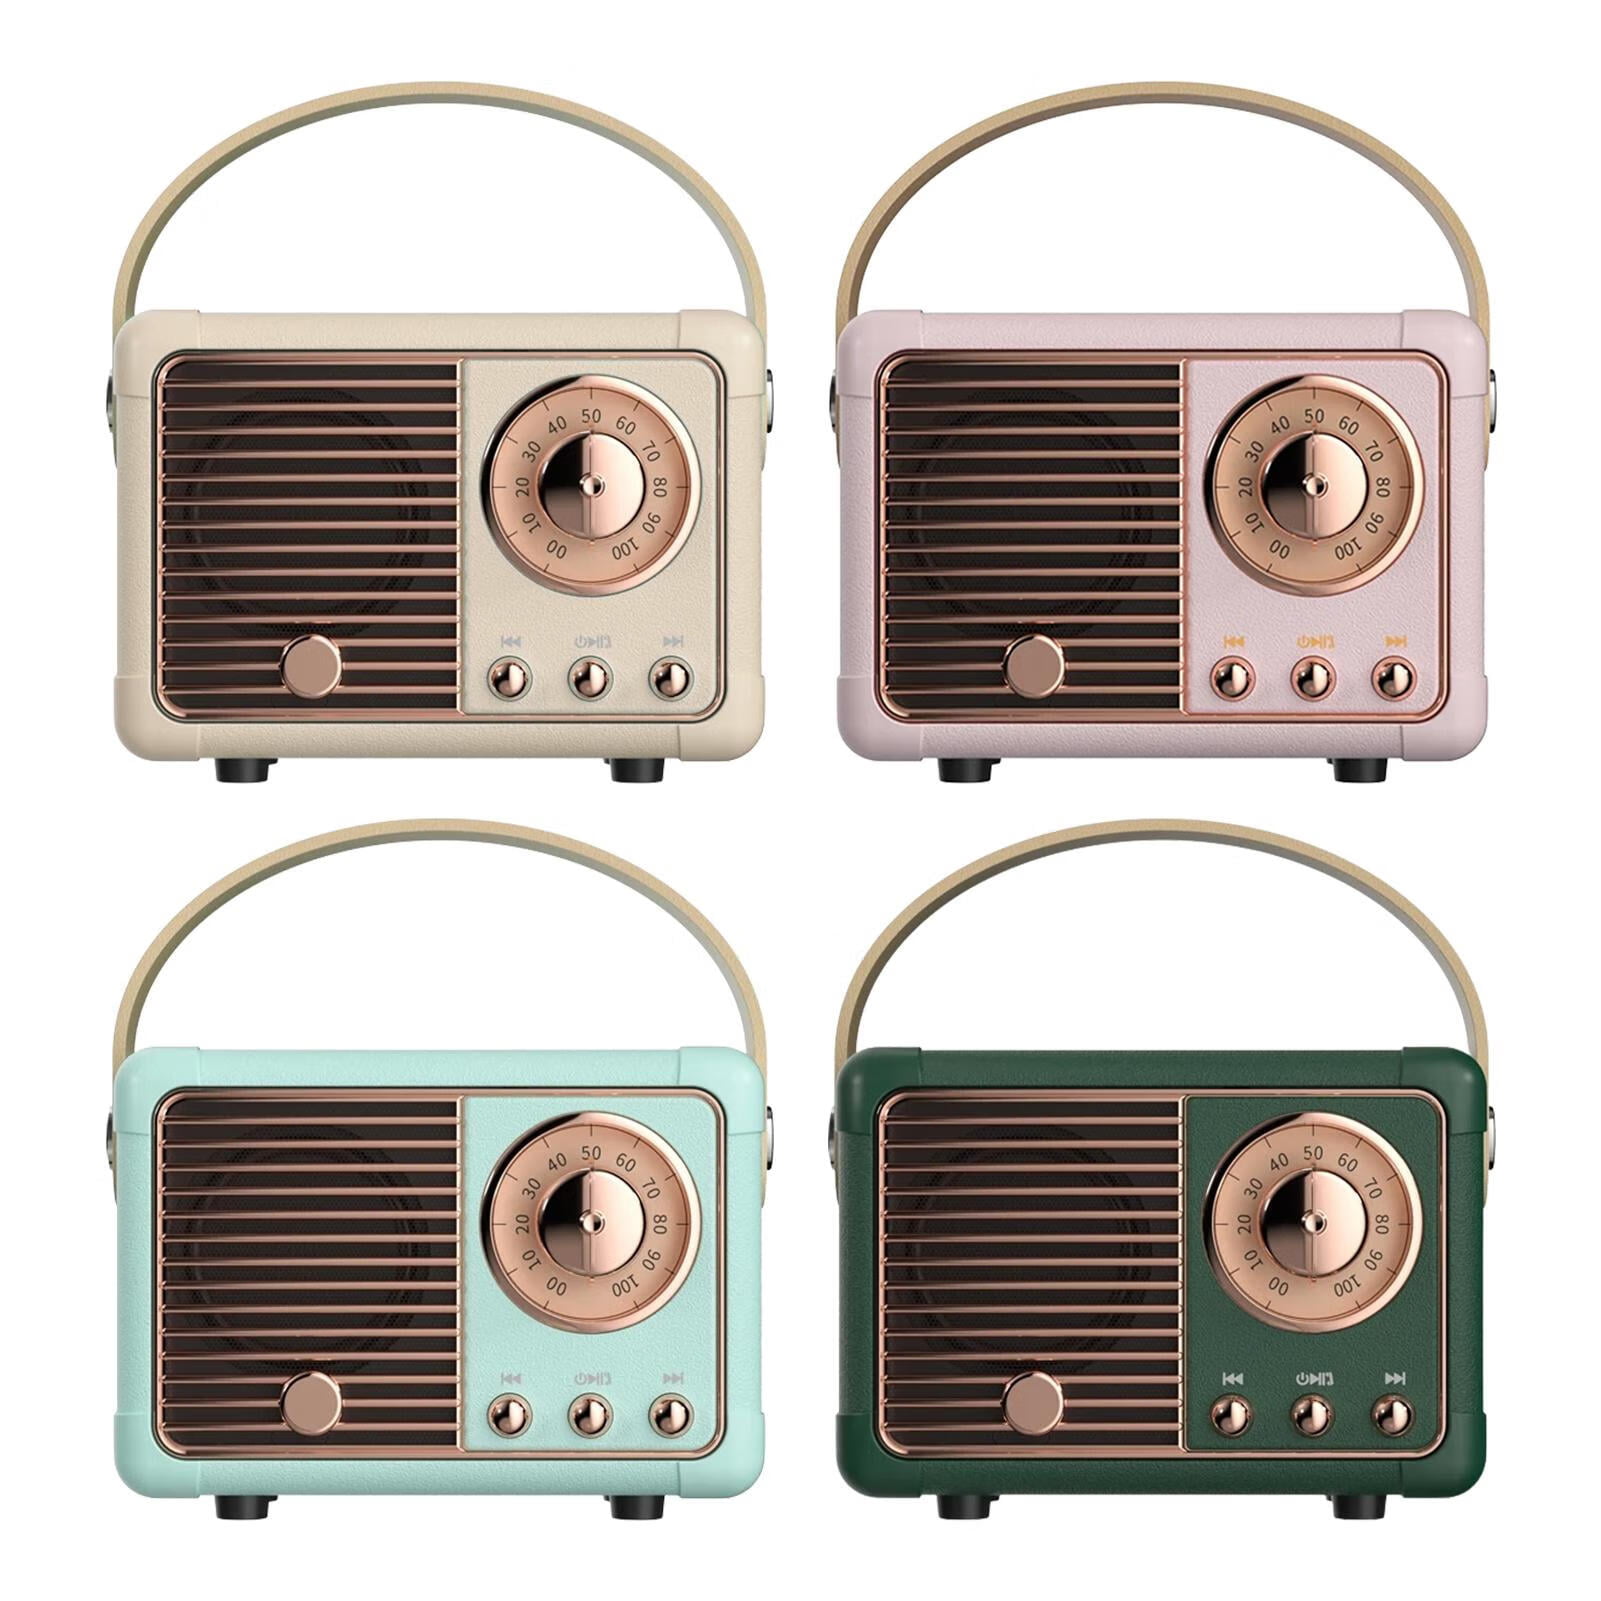 Retro Blue-tooth Speaker|Vintage FM Radio|Wireless Speaker with Fashioned Style,Strong Bass Enhancement,Loud Volume - Walmart.com